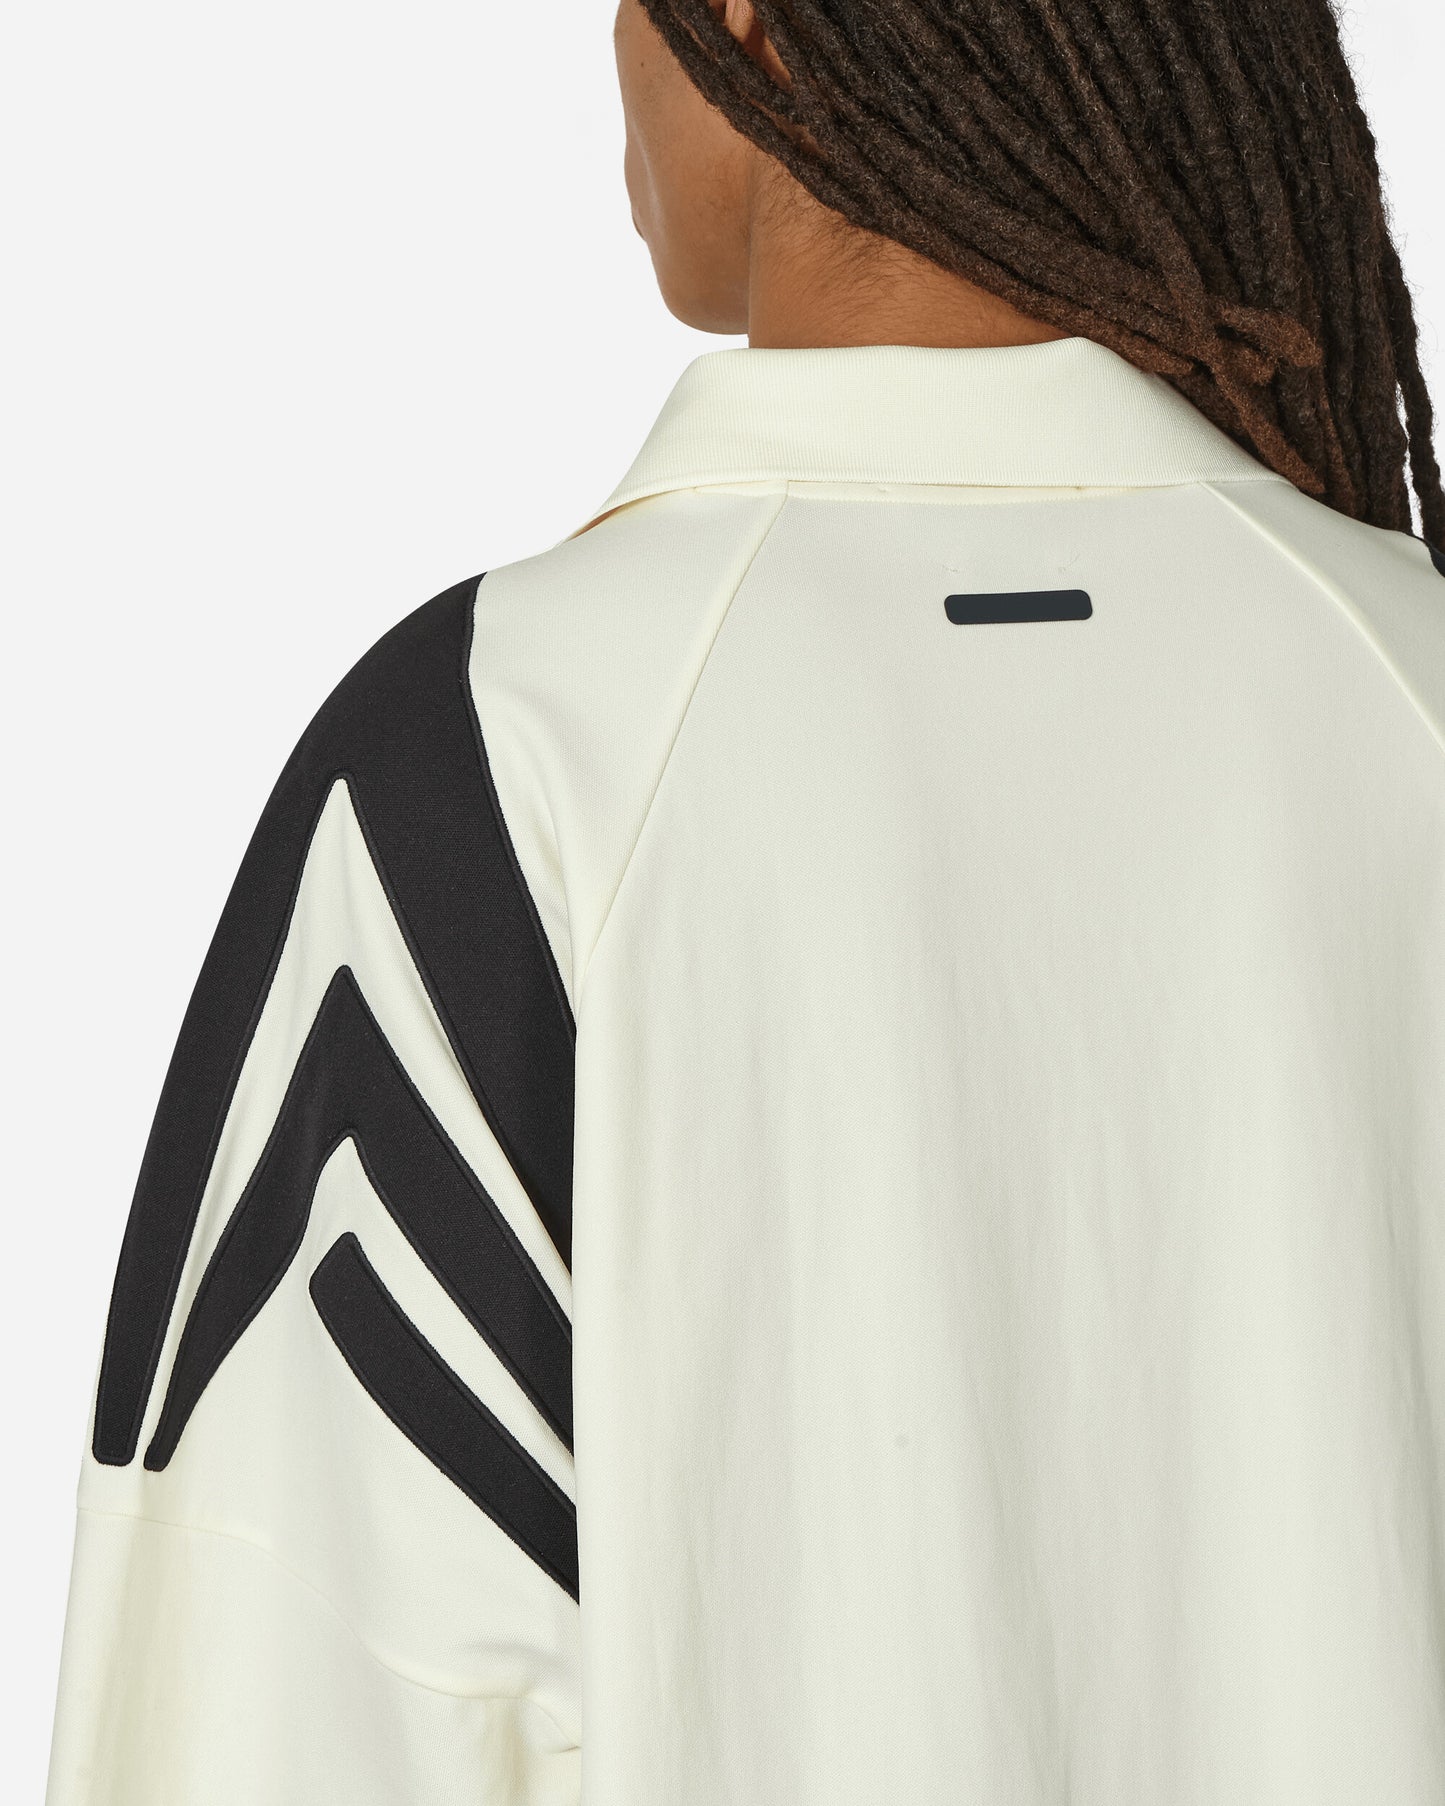 adidas Athletics Jersy Cream White T-Shirts Polo IM6061 001